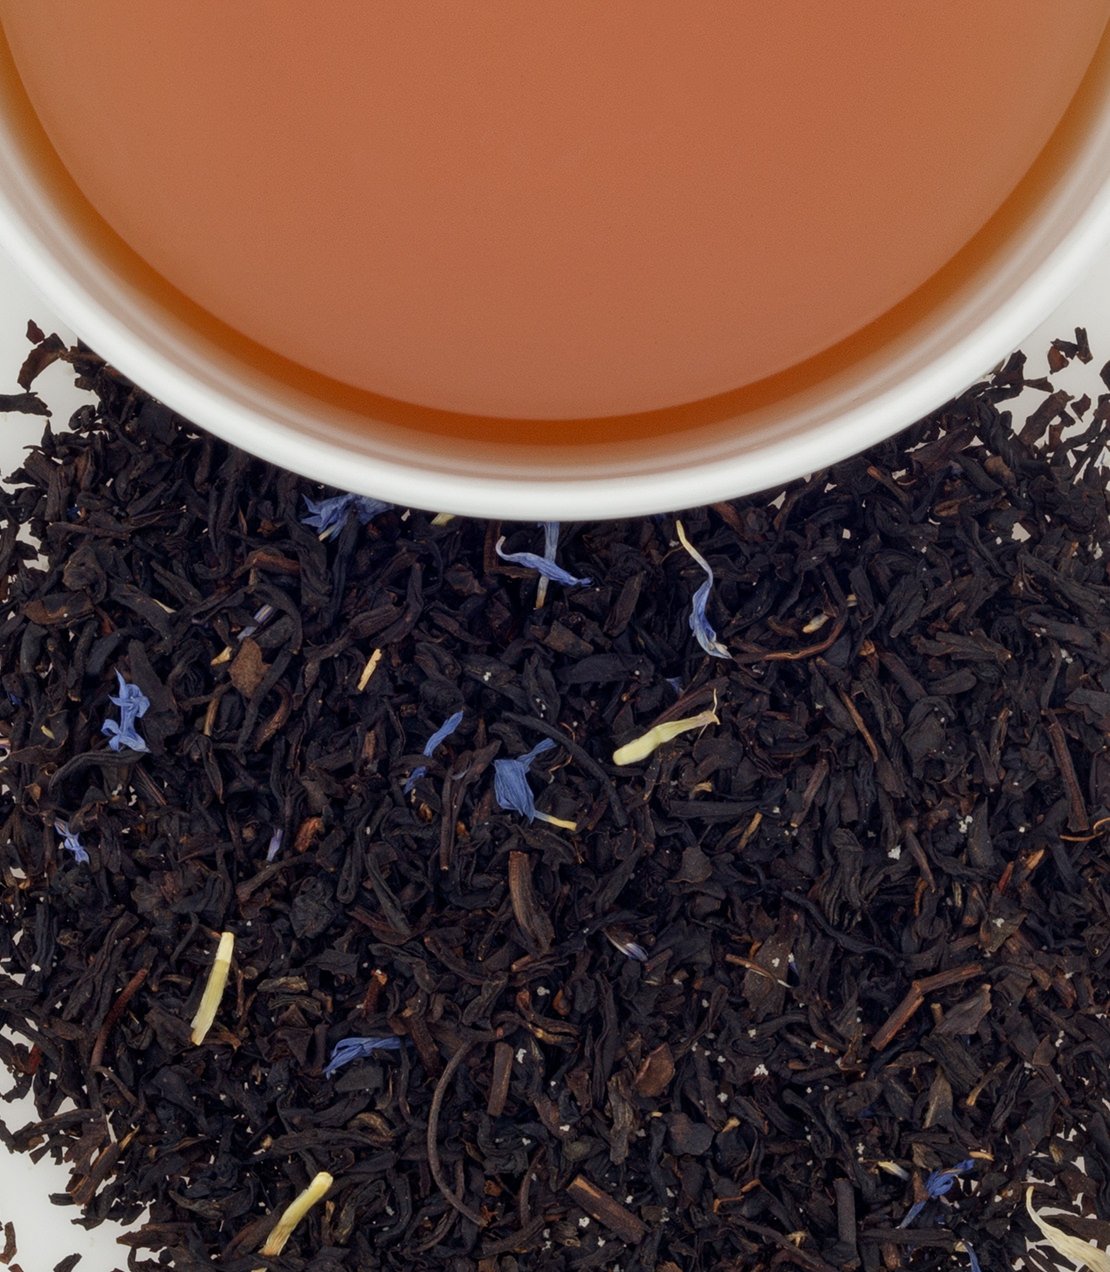 Celebration Tea - Black tea with the flavours of hazelnut, cinnamon, apricot  - Harney & Sons Fine Teas Europe